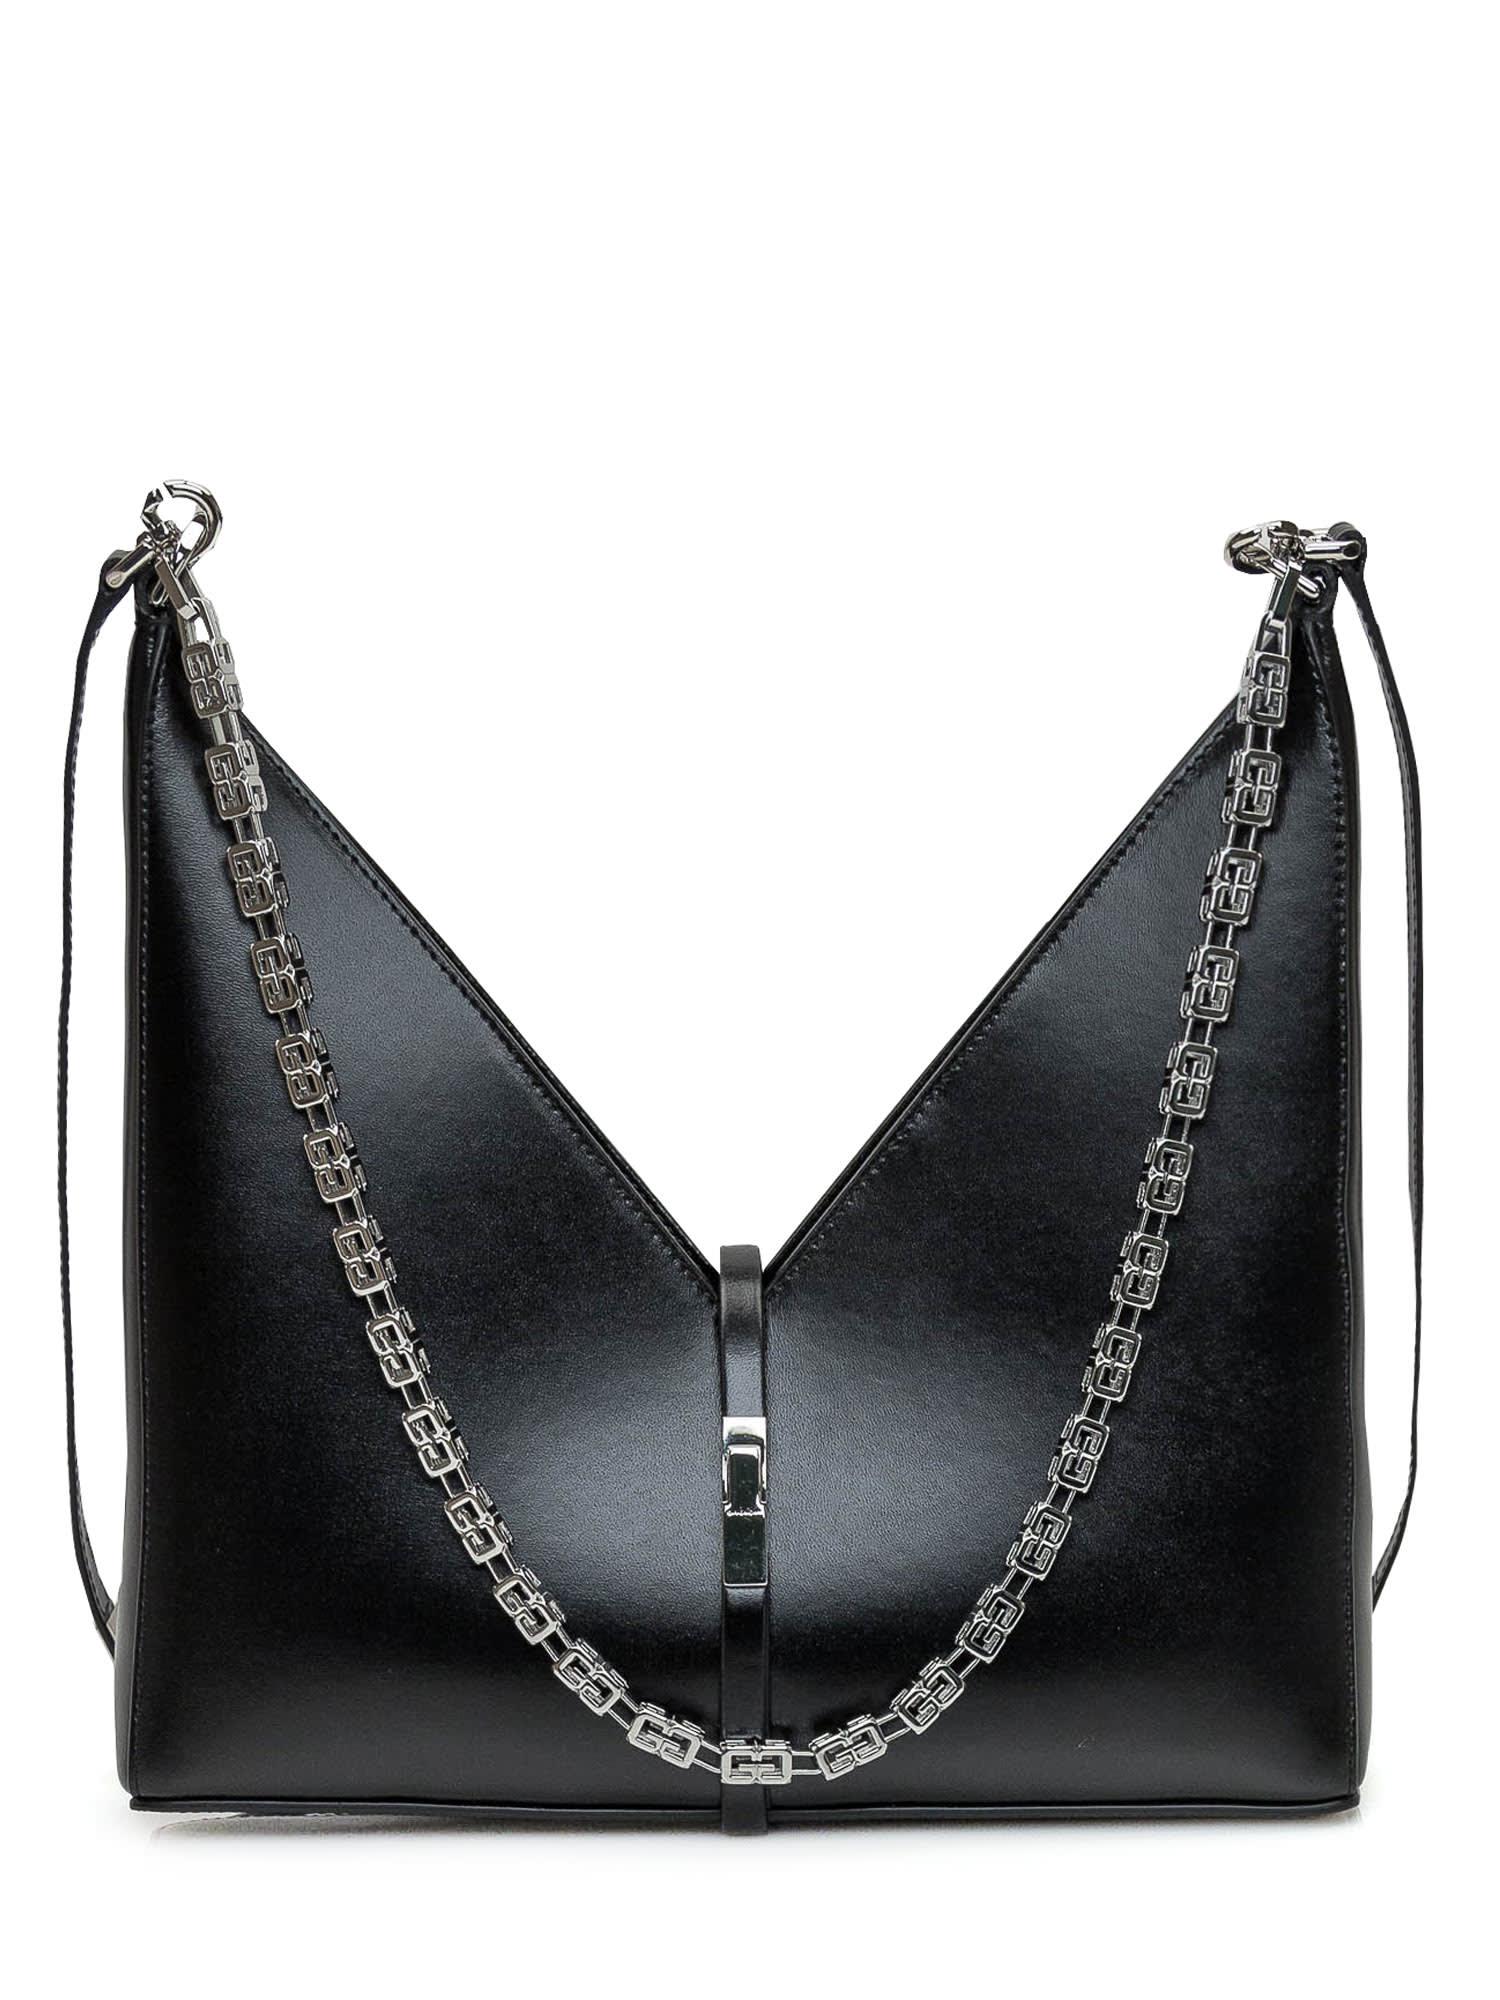 Givenchy Black Small Cut-Out Shoulder Bag